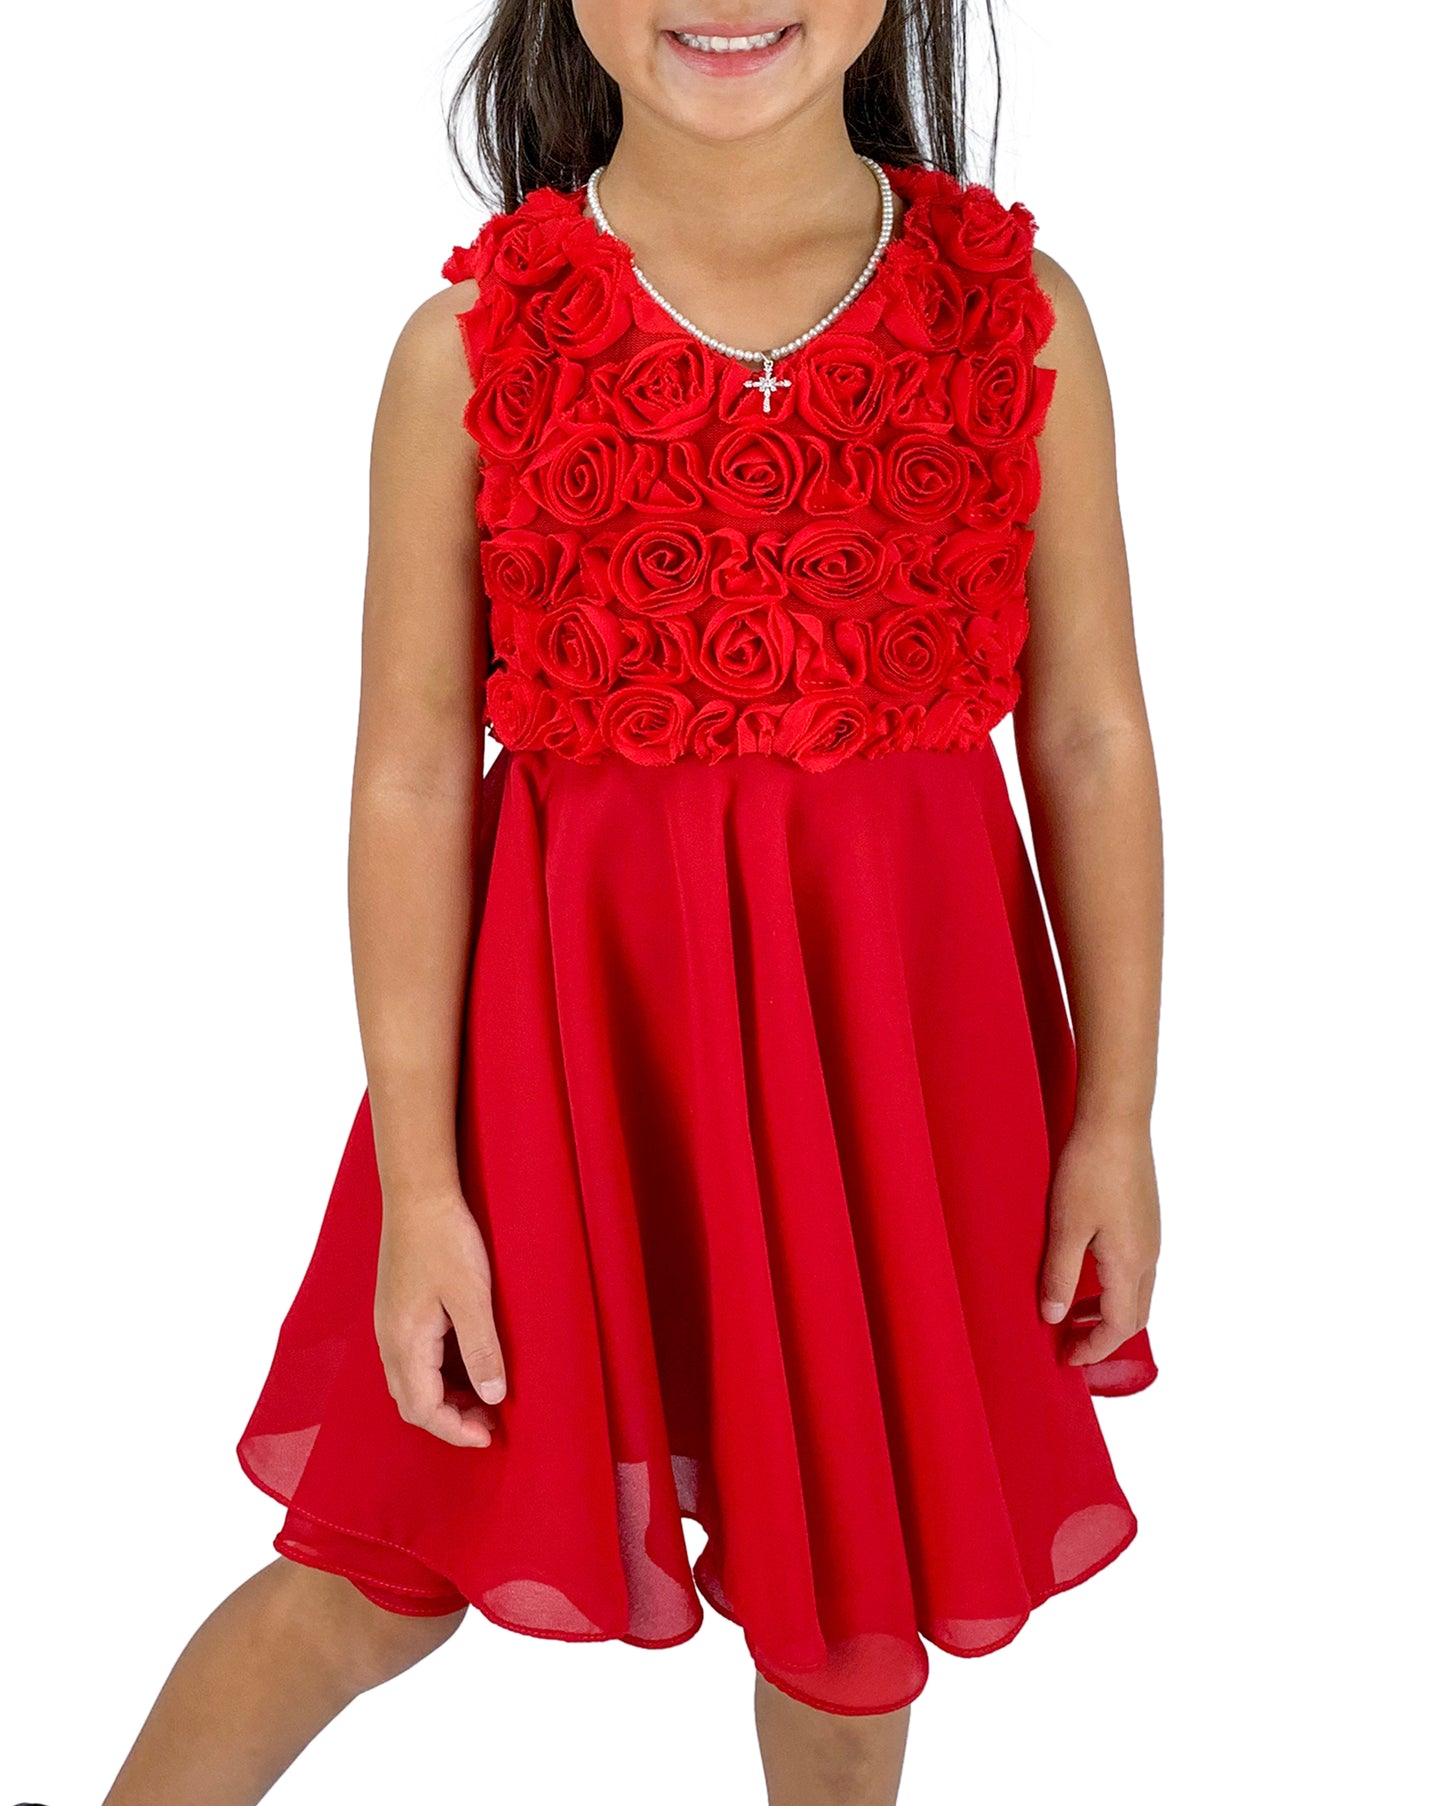 Helena and Harry Girl's Red Rosette Dress